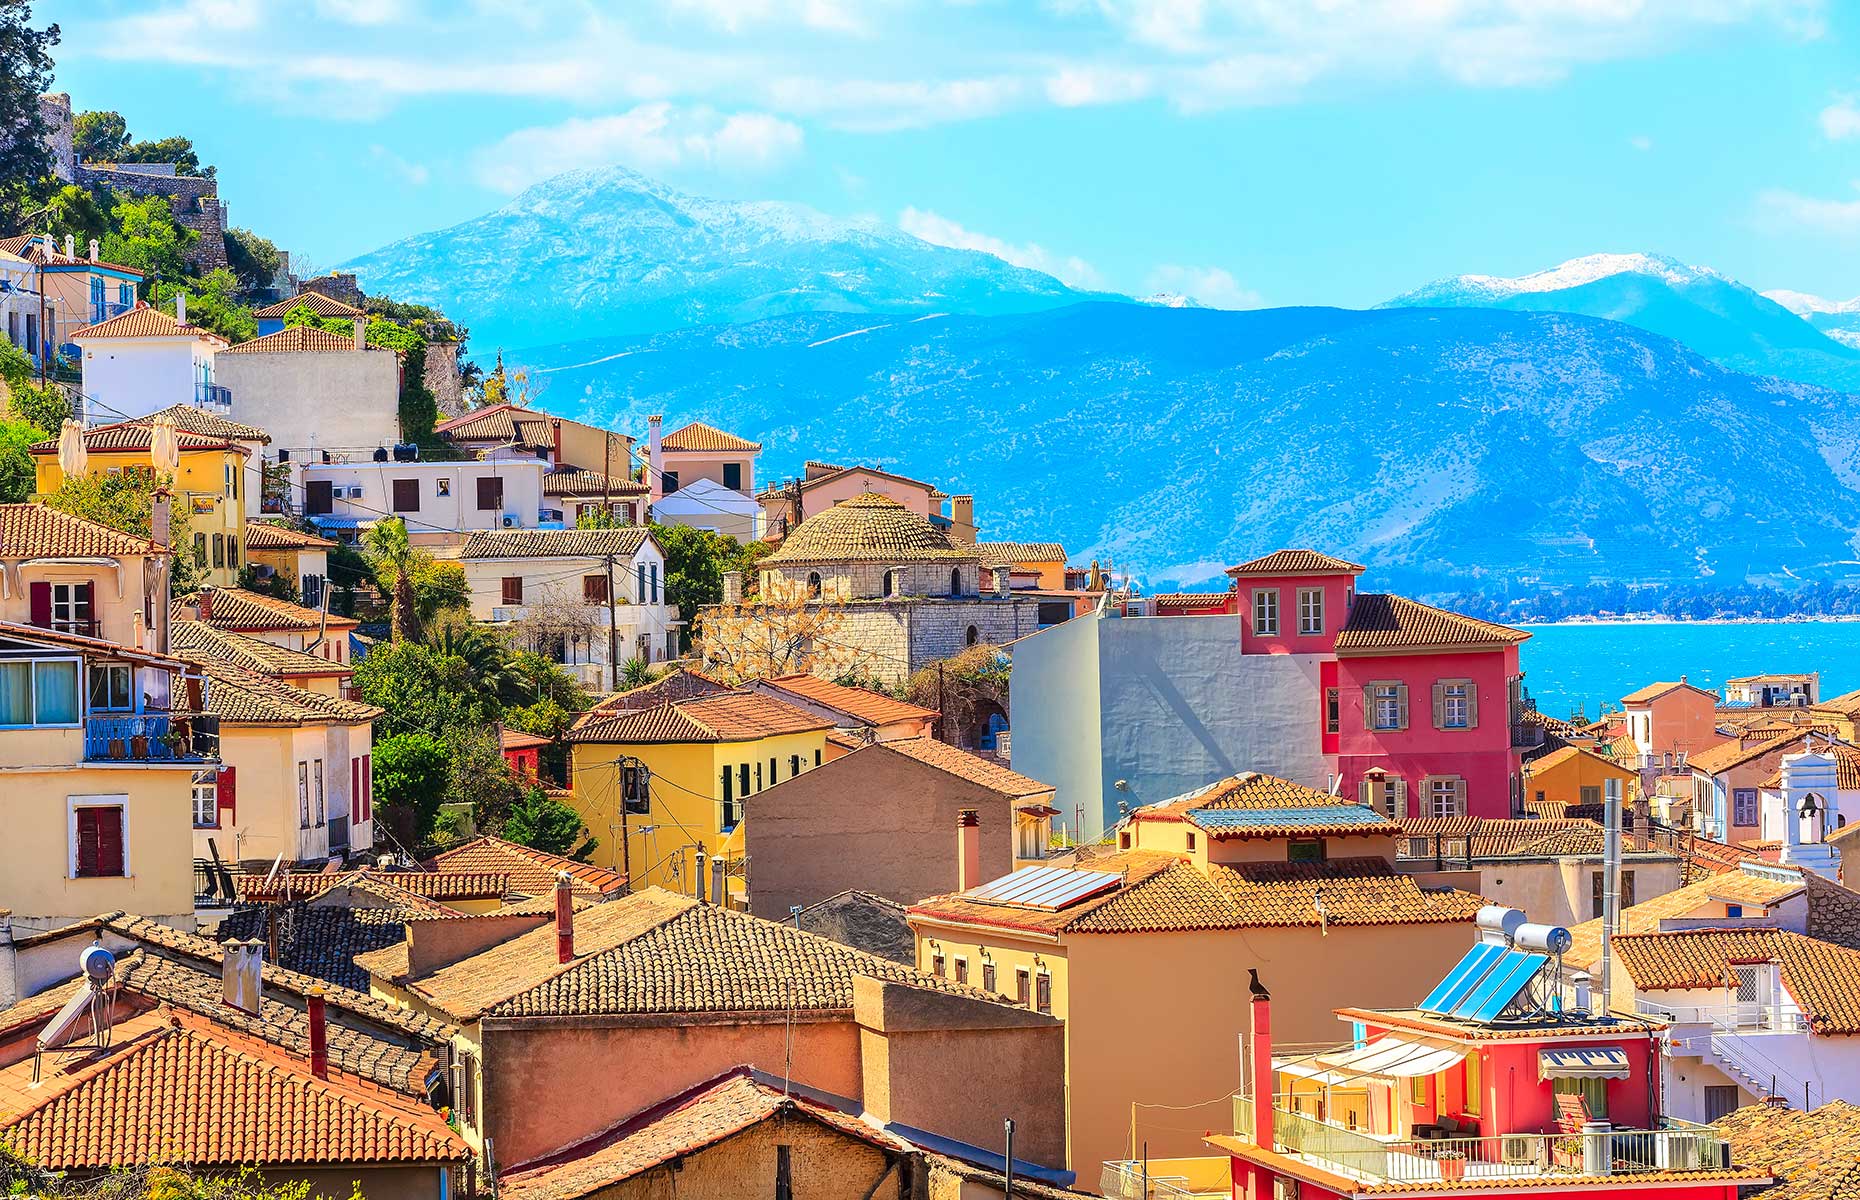 Nafplio, Peloponnese, Greece (Image: Nataliya Nazarova/Shutterstock)